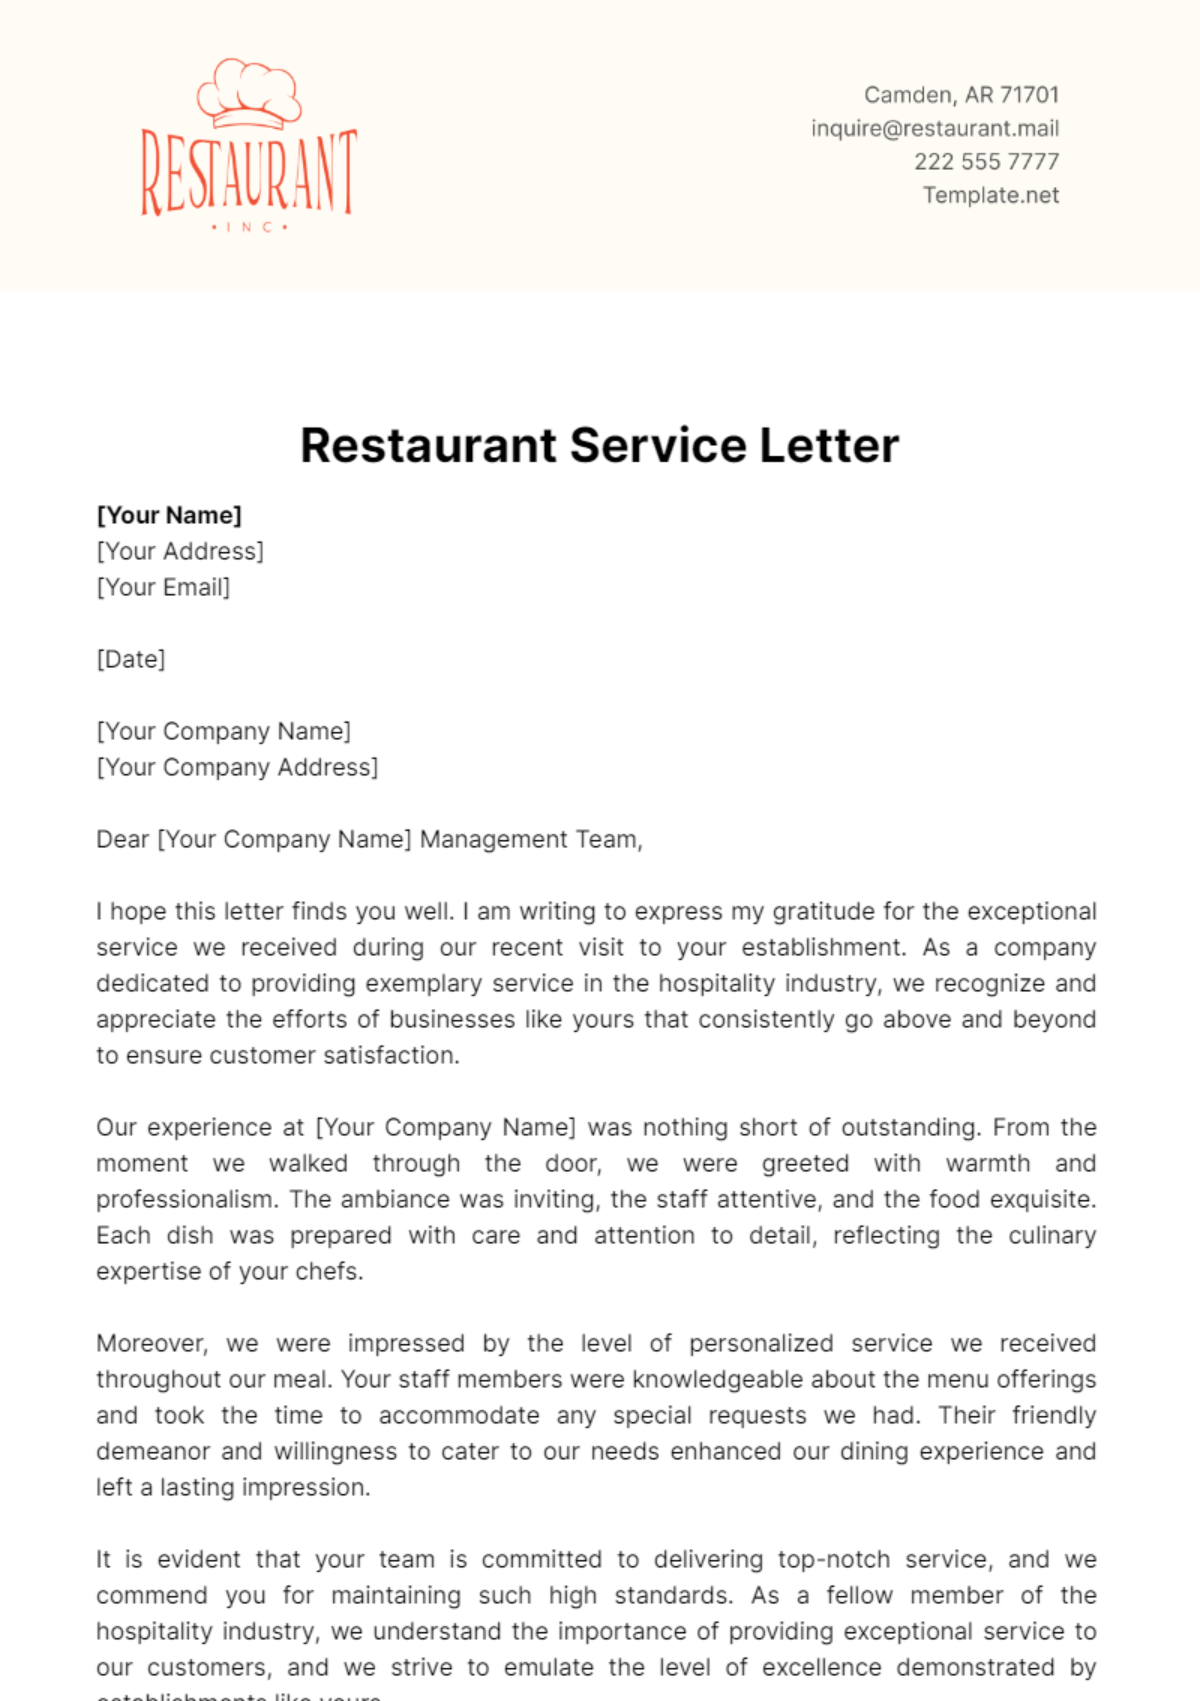 Free Restaurant Service Letter Template